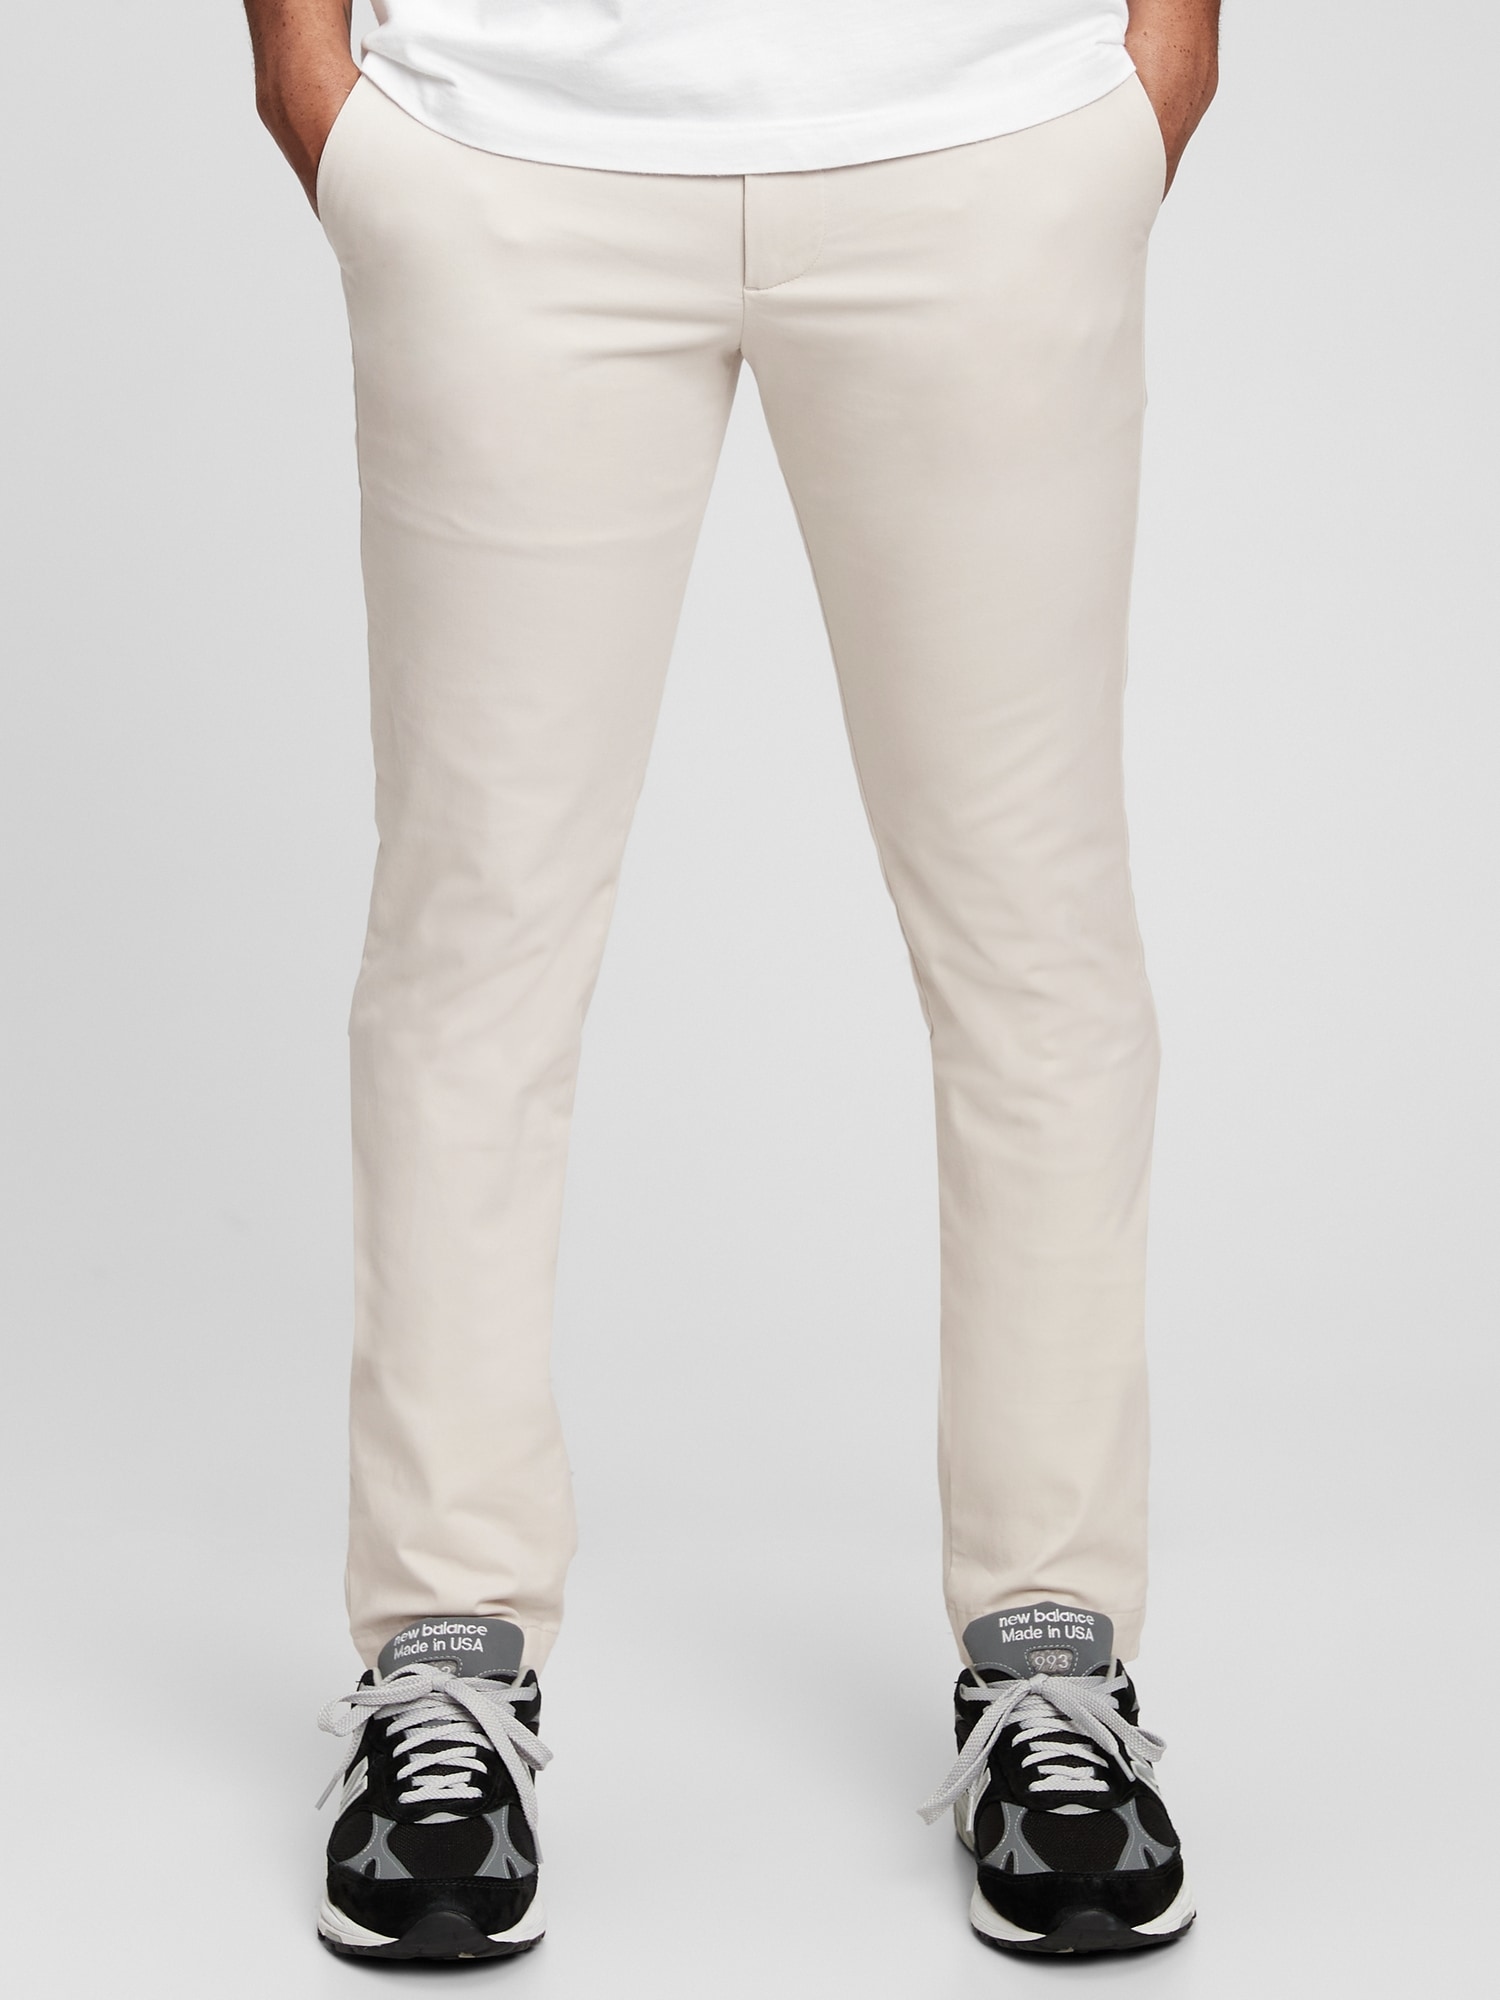 Modern Khakis in Skinny with GapFlex |